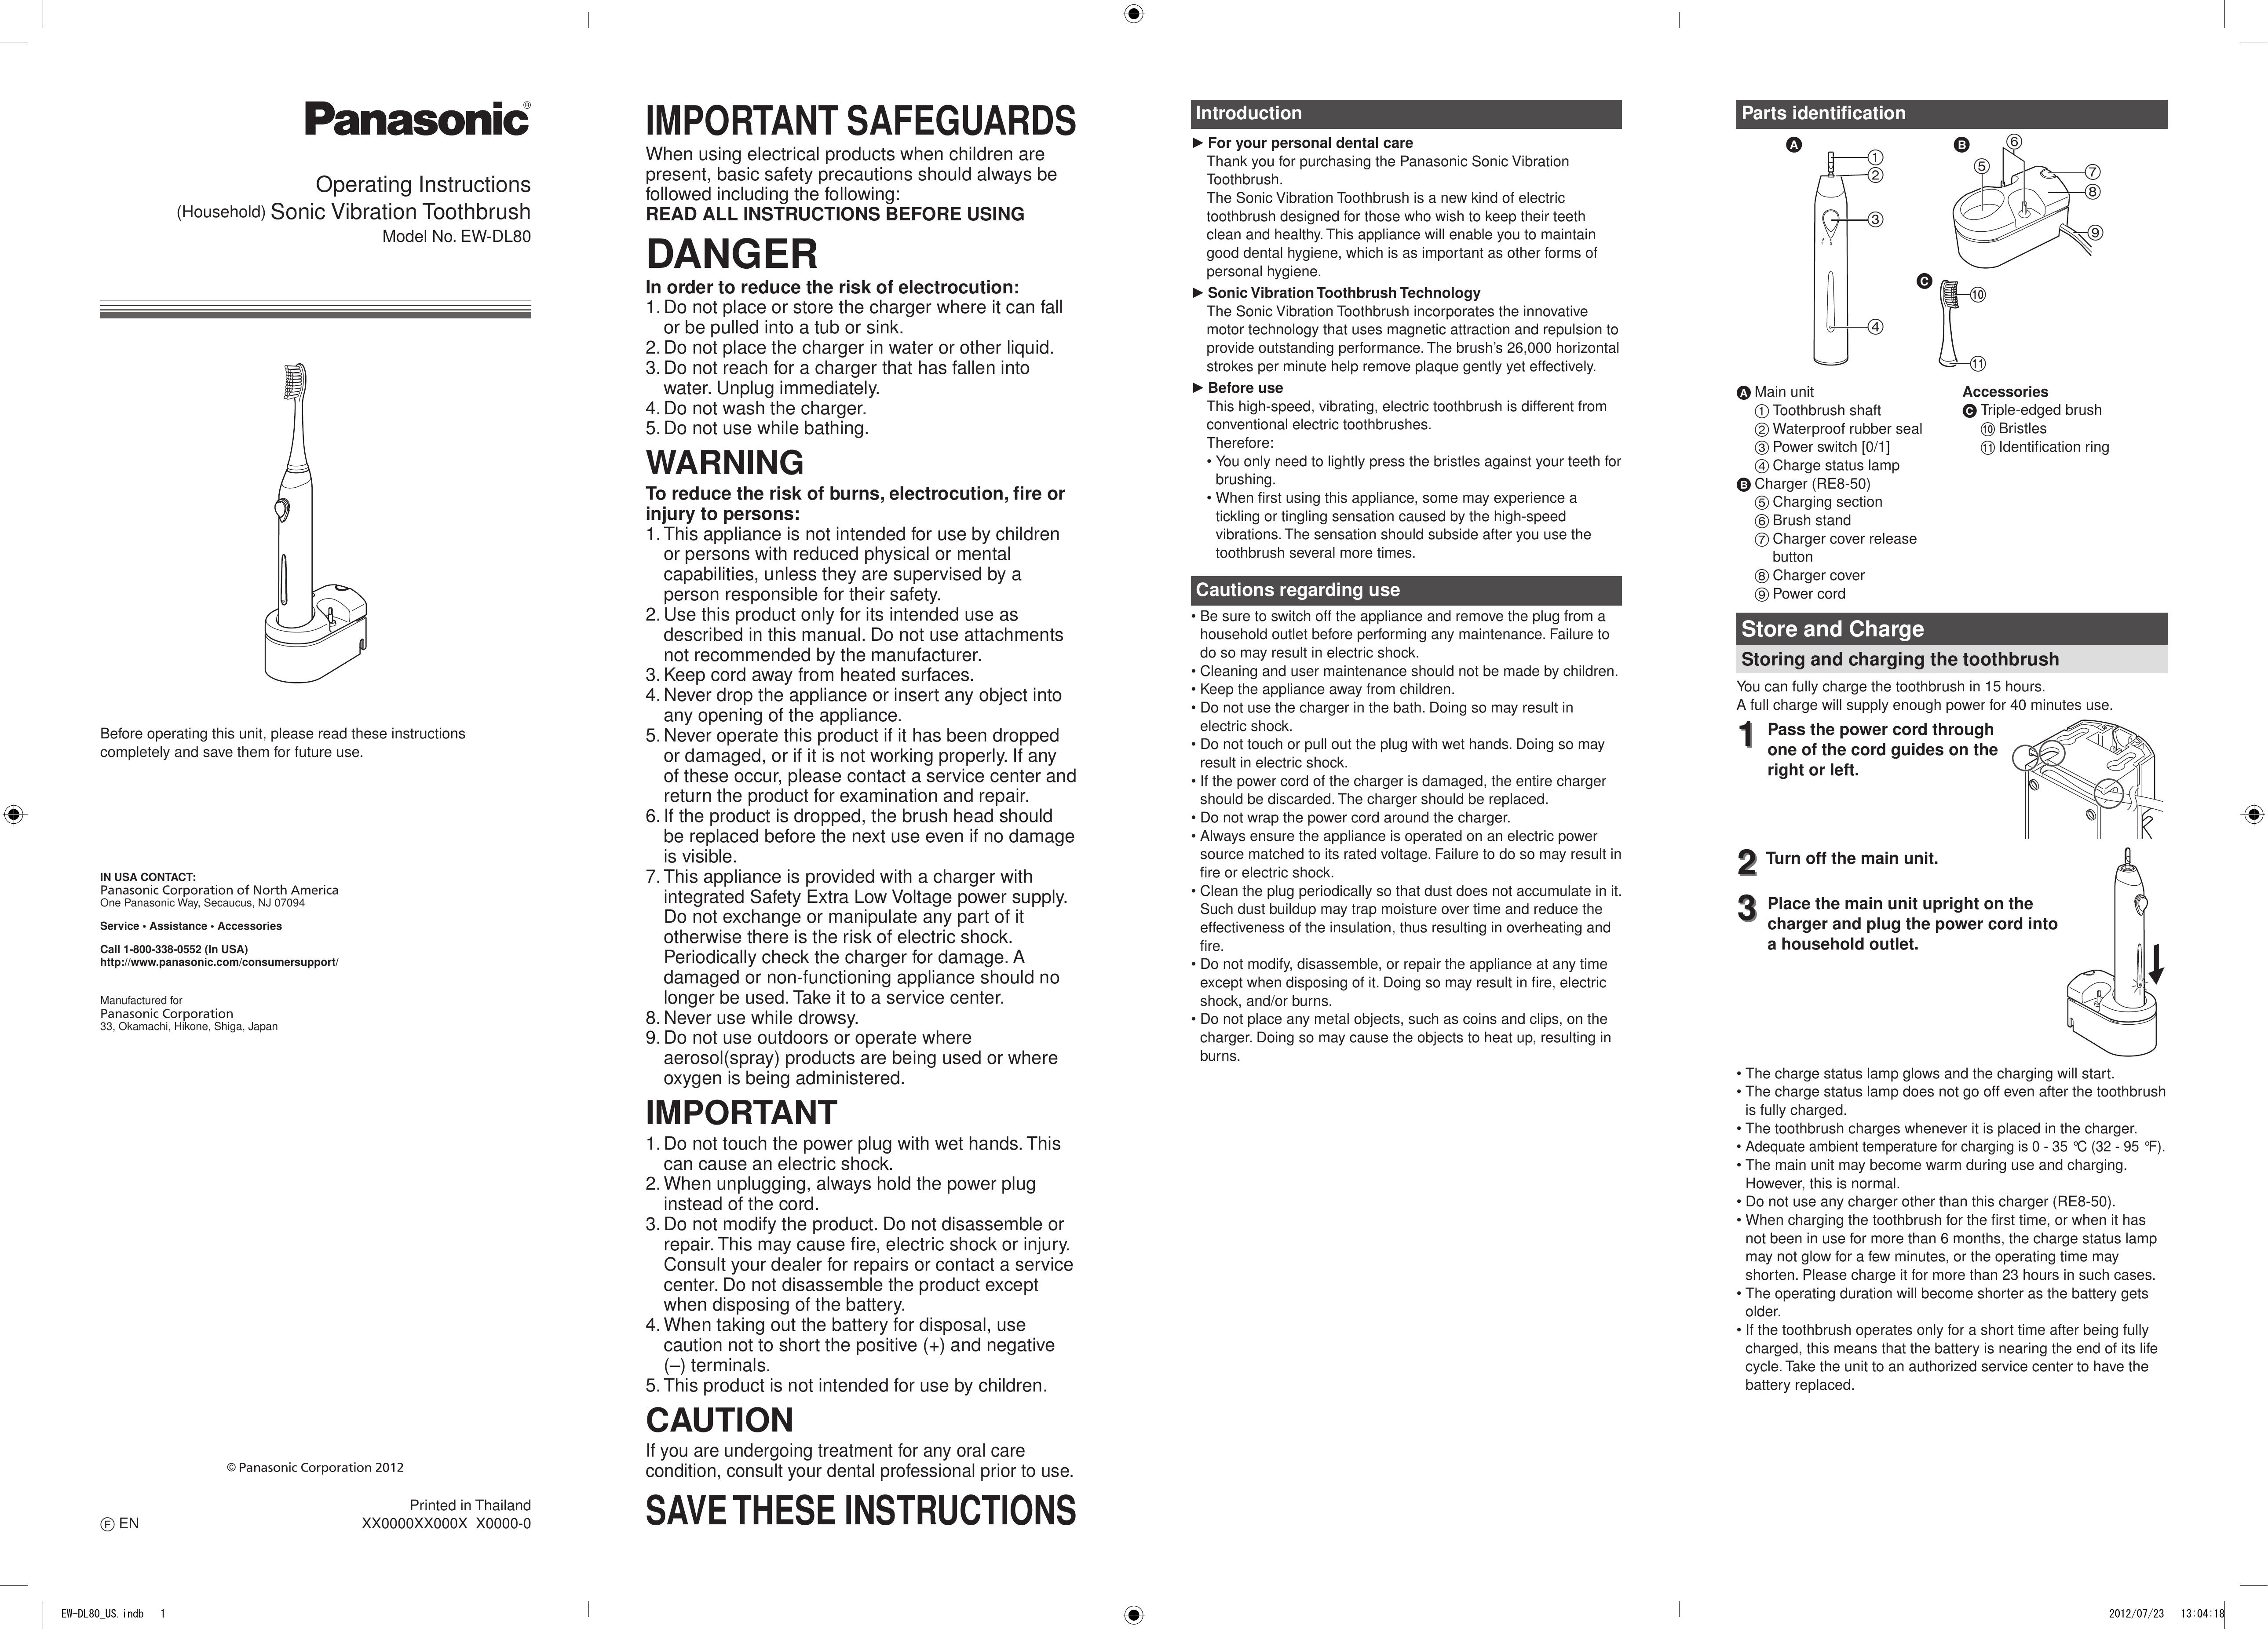 Panasonic EW-DL80 Electric Toothbrush User Manual